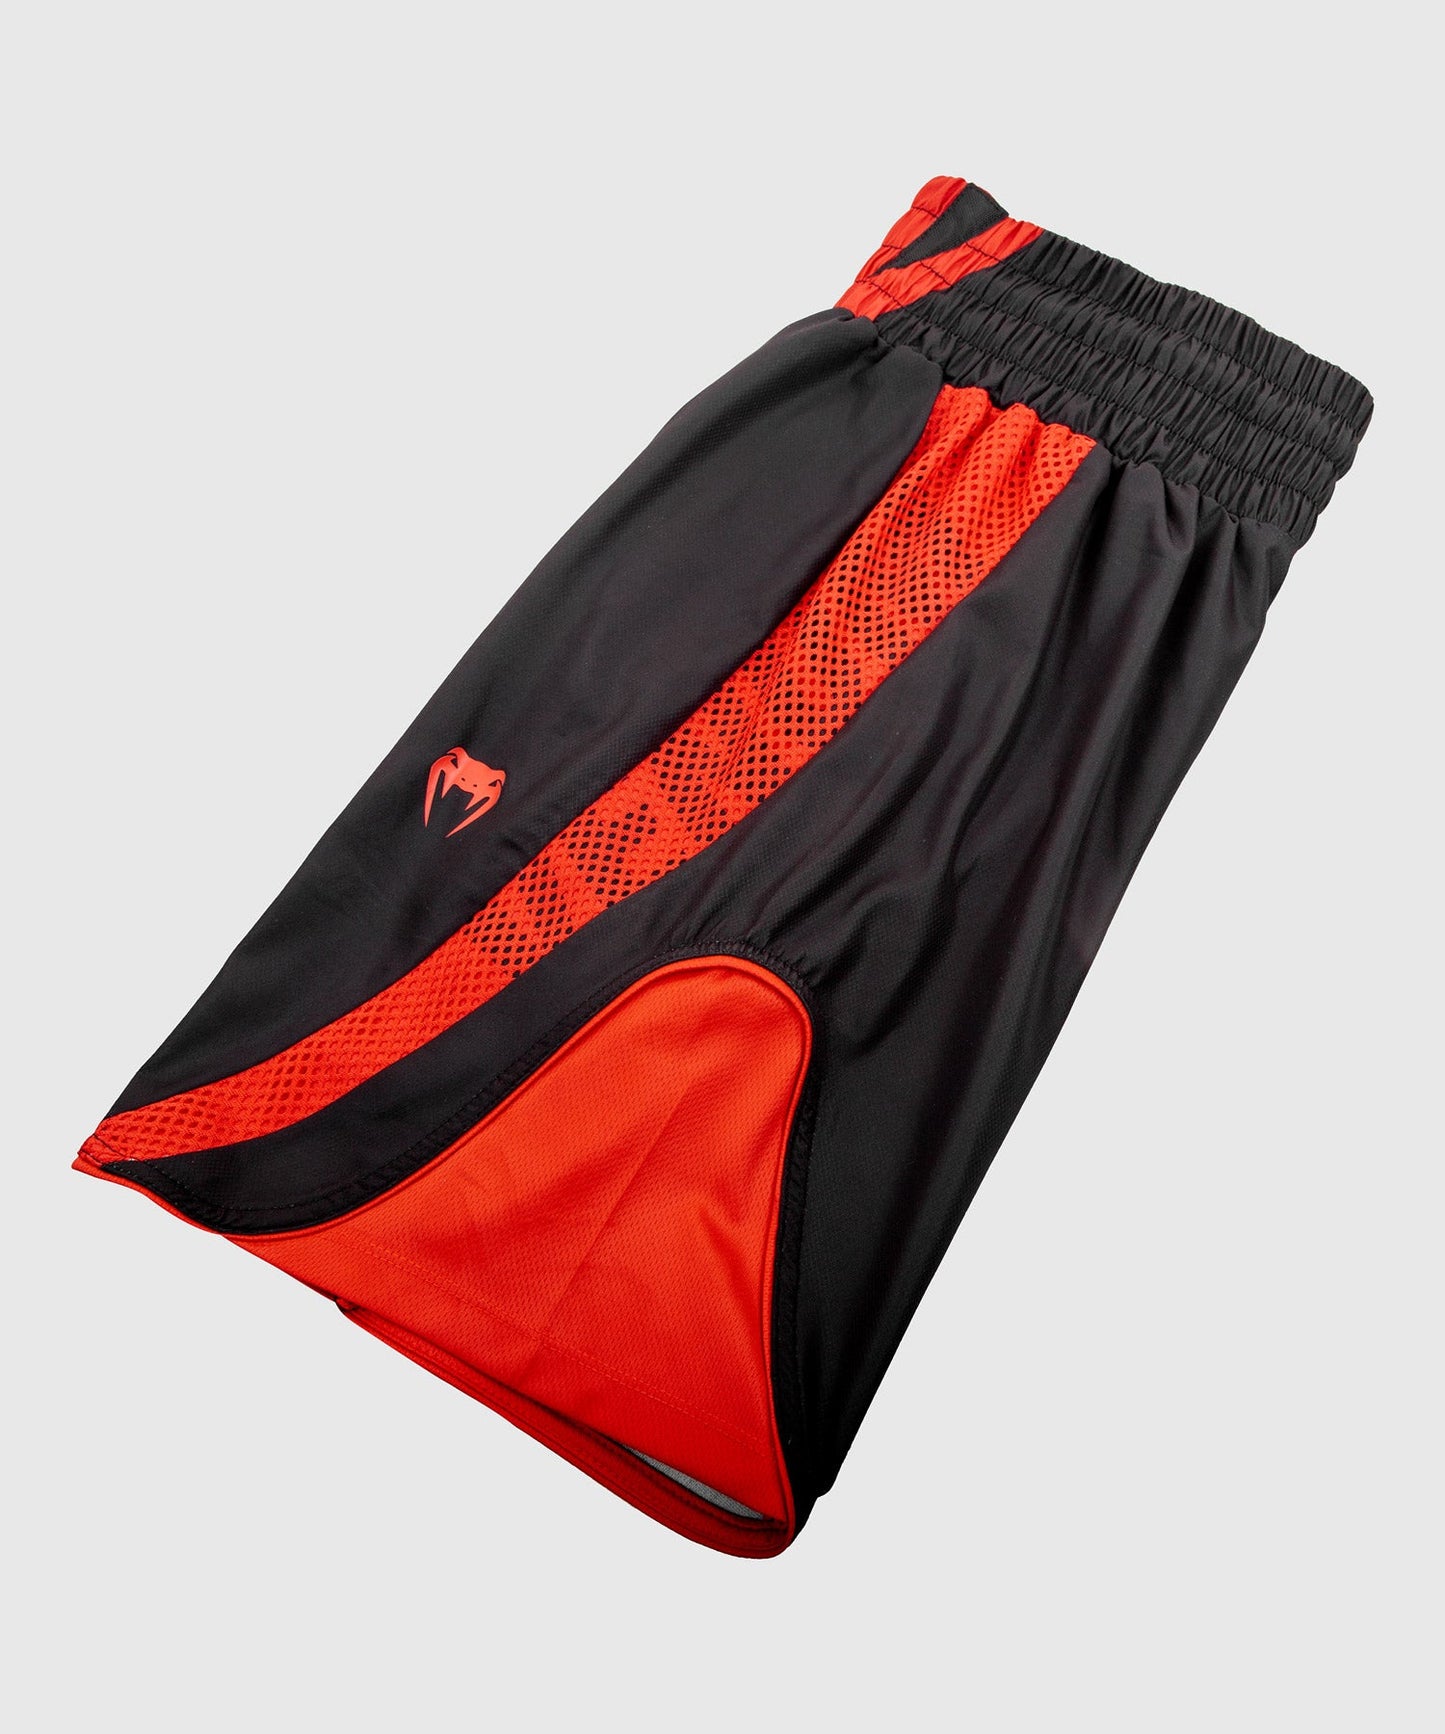 Venum Elite Boxing Shorts - Black/Red